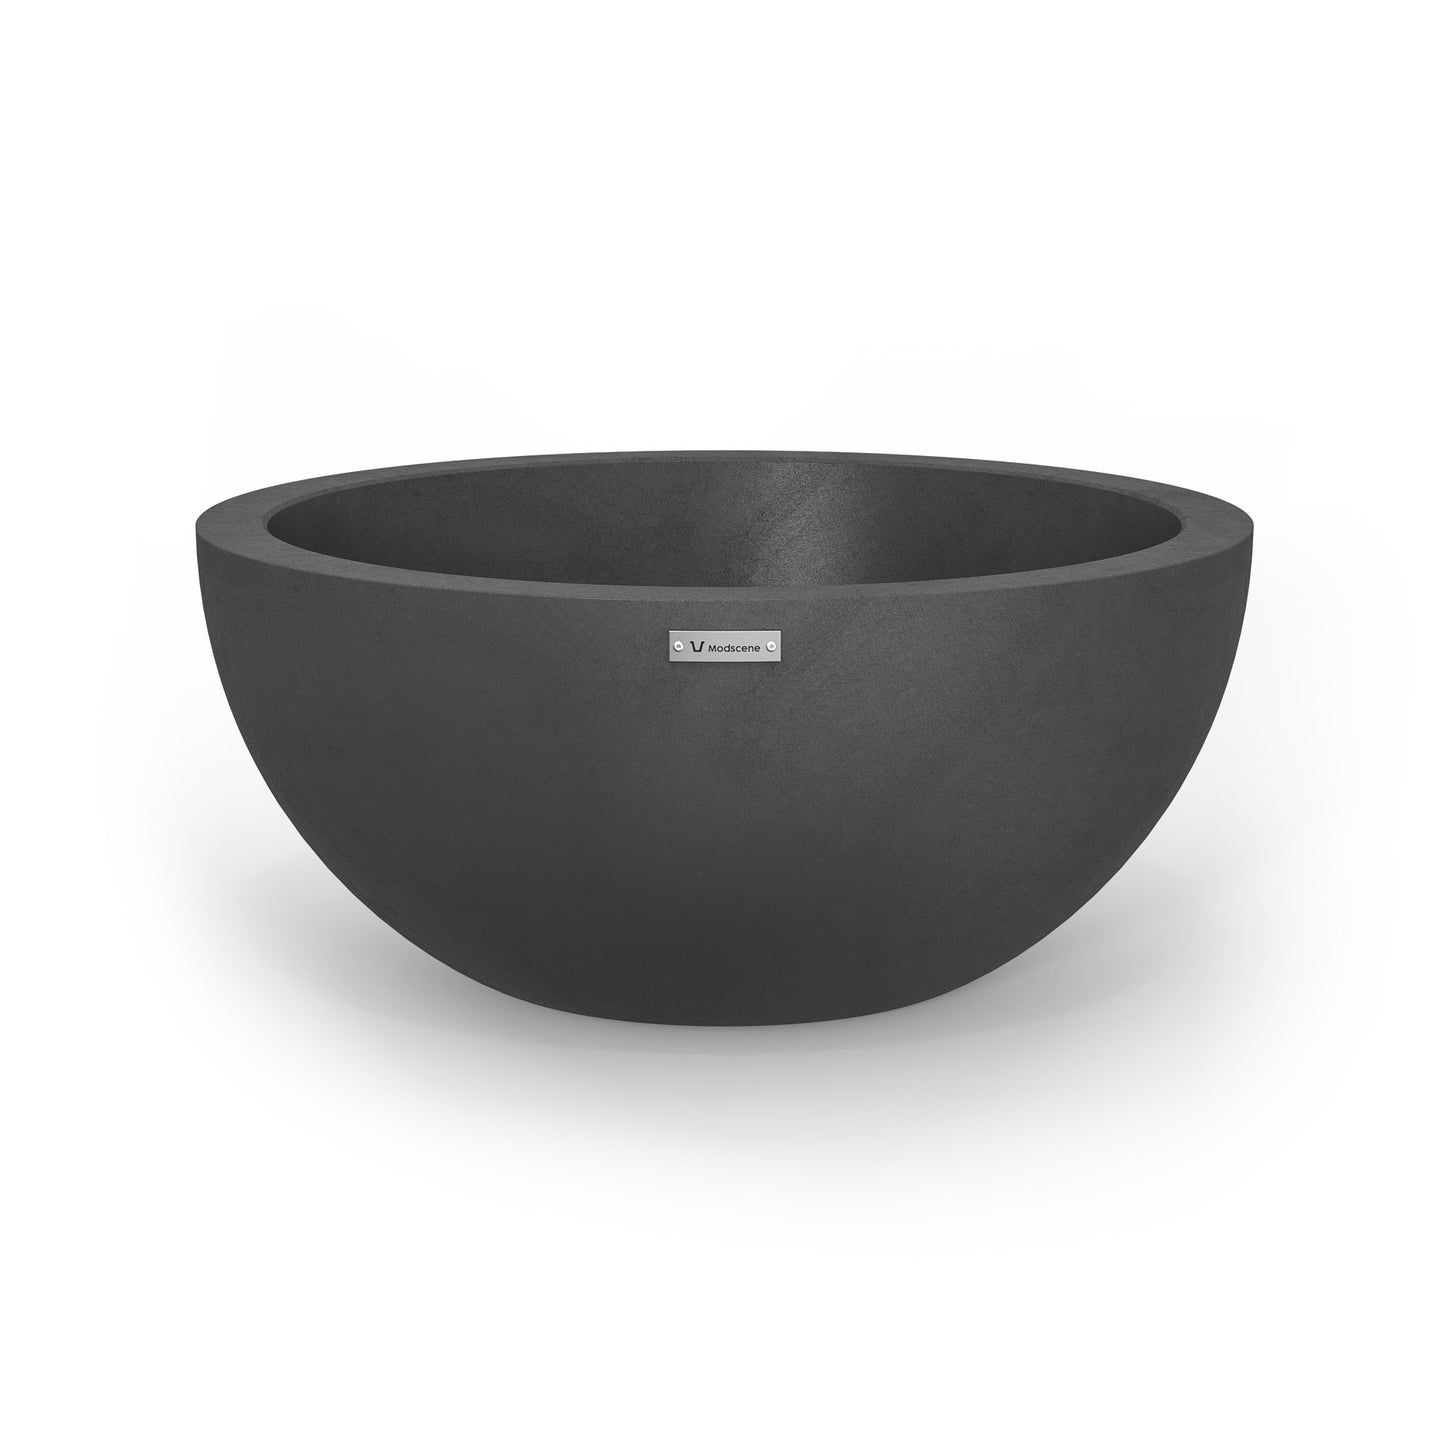 A medium Modscene planter bowl in a dark grey colour with a concrete look.